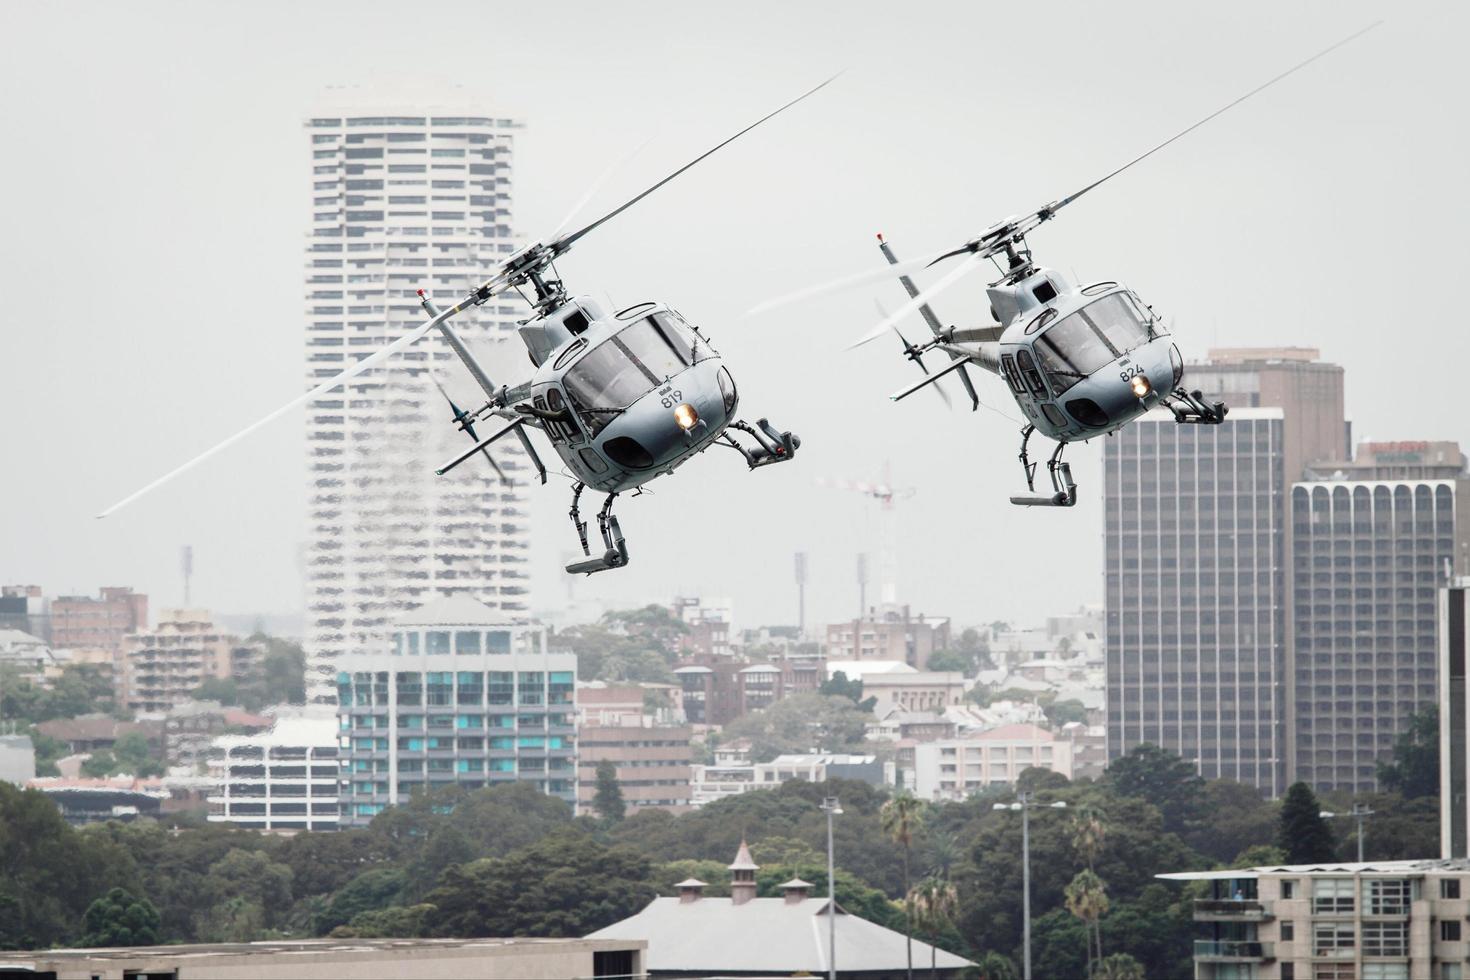 Sydney, Australië, 2020 - twee helikopters vliegen in de stad foto